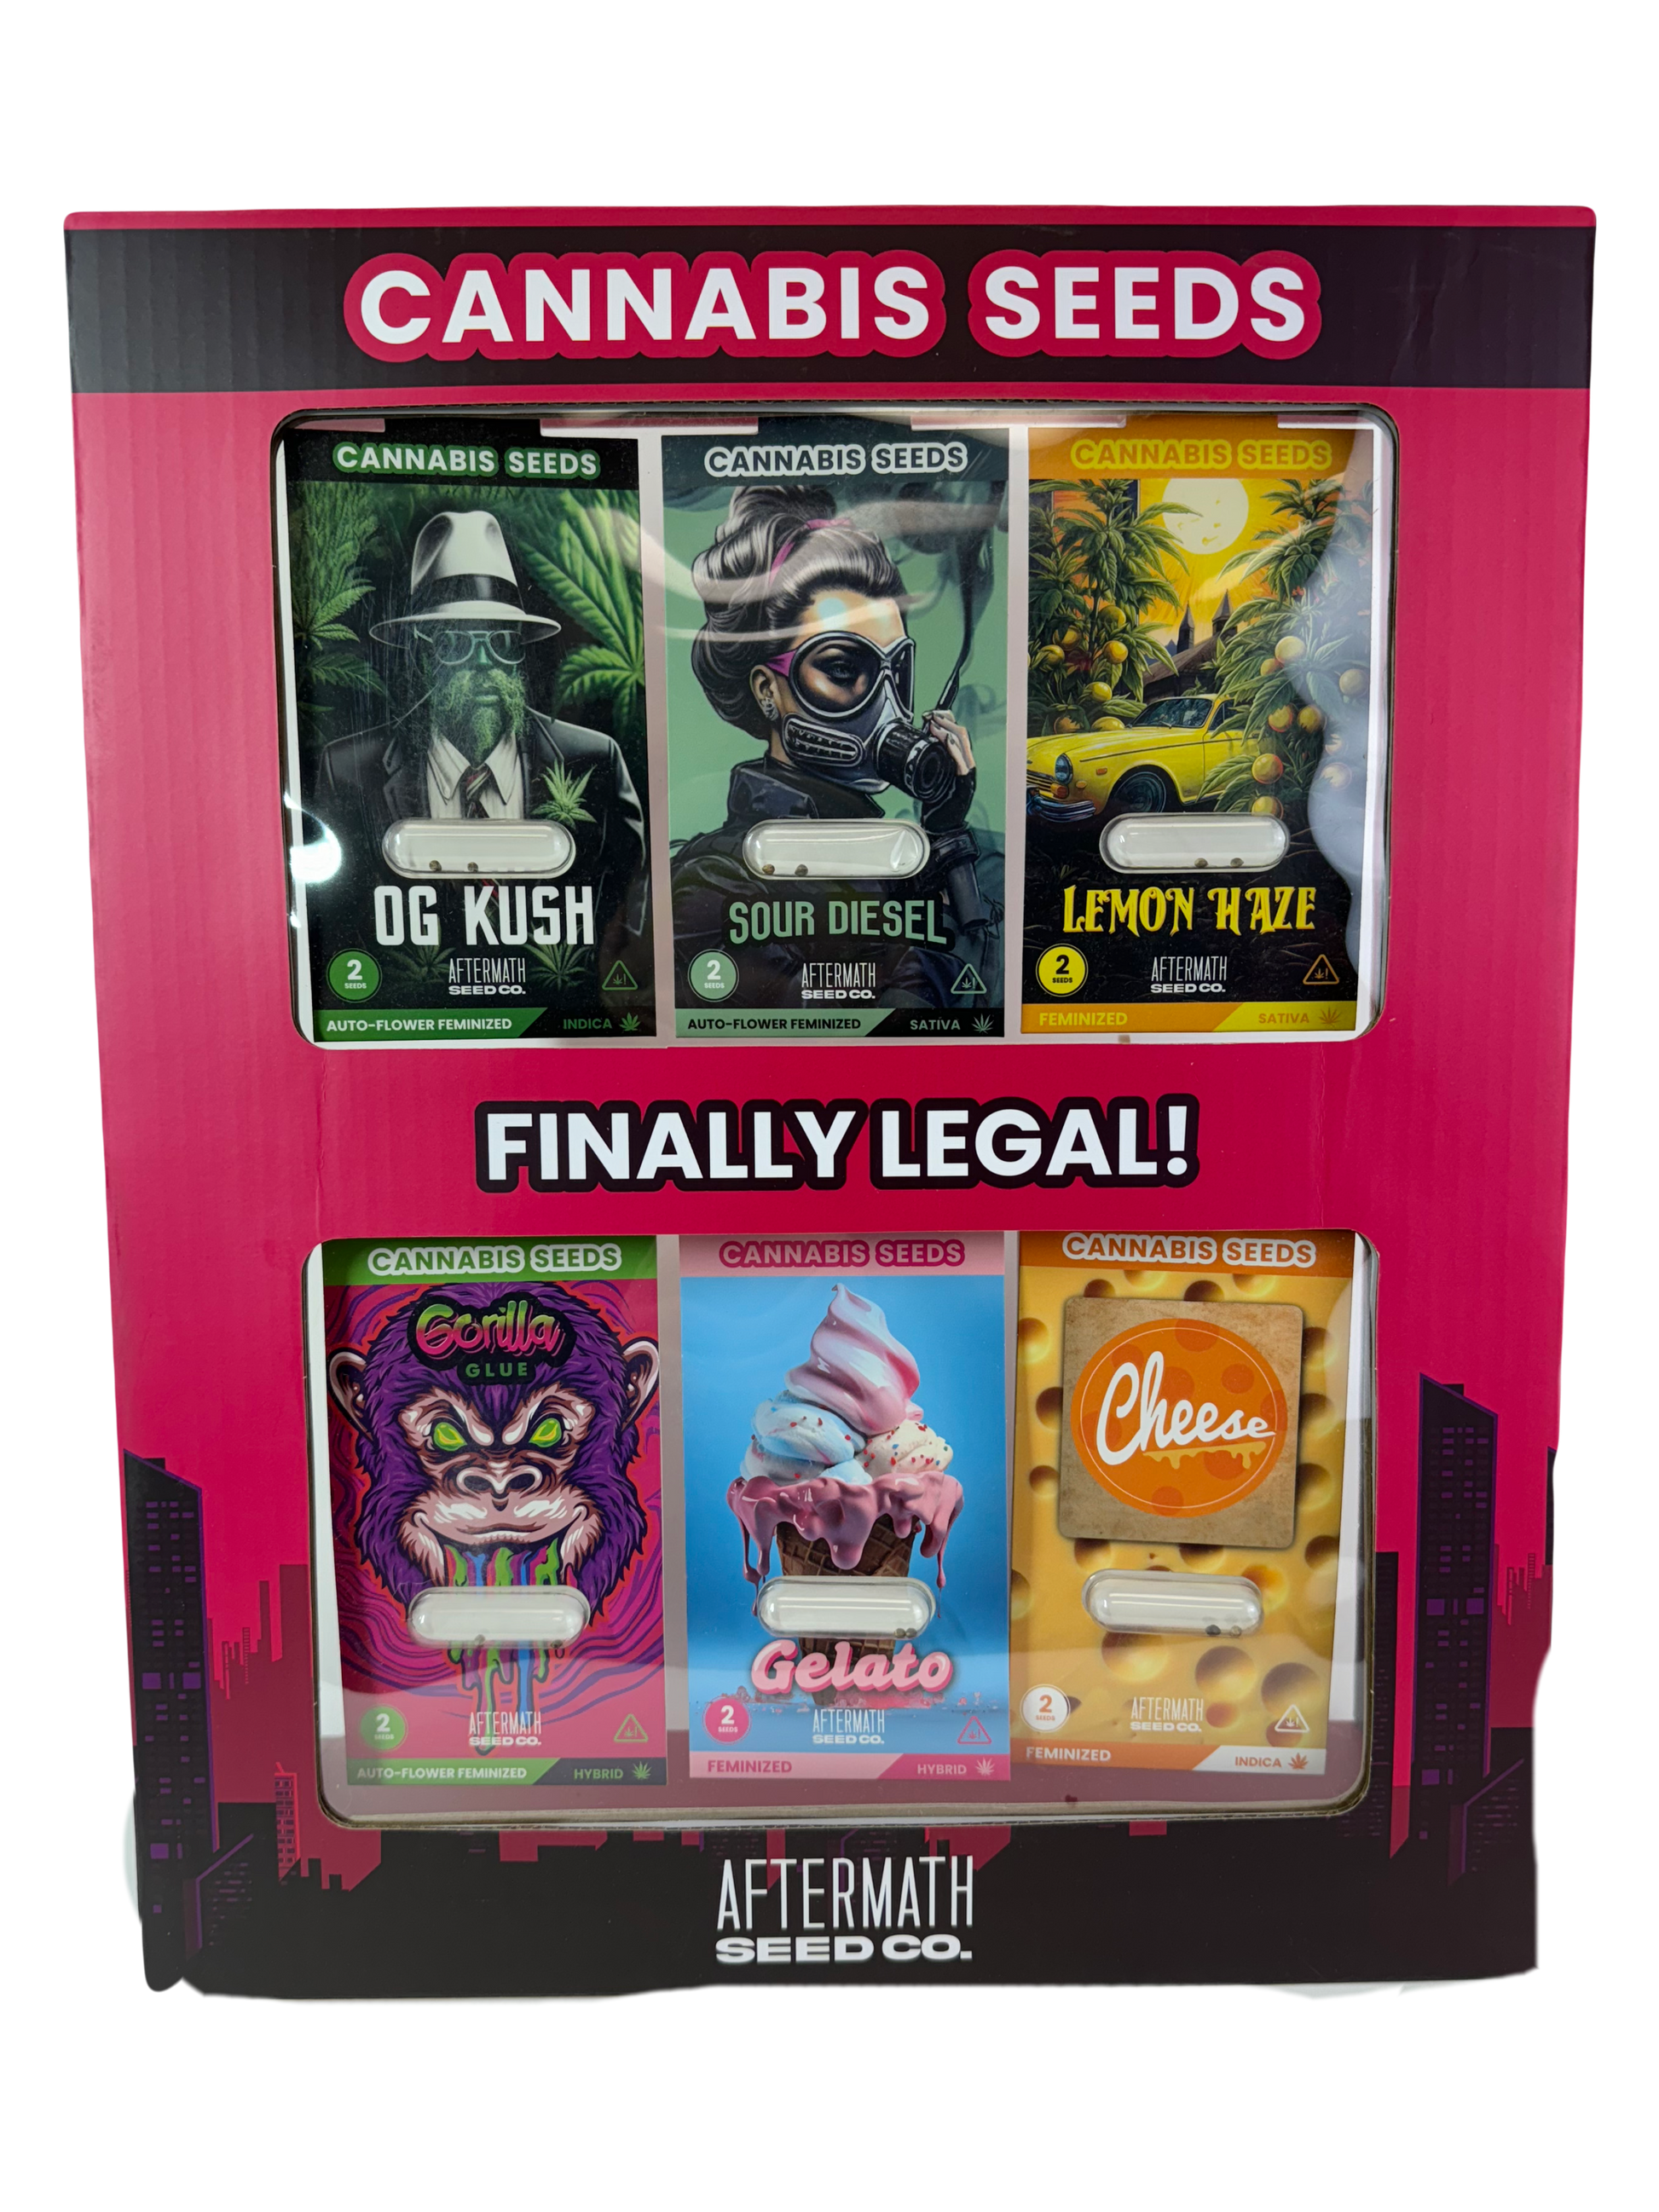 Aftermath Seed Co. Cannabis Seeds Display